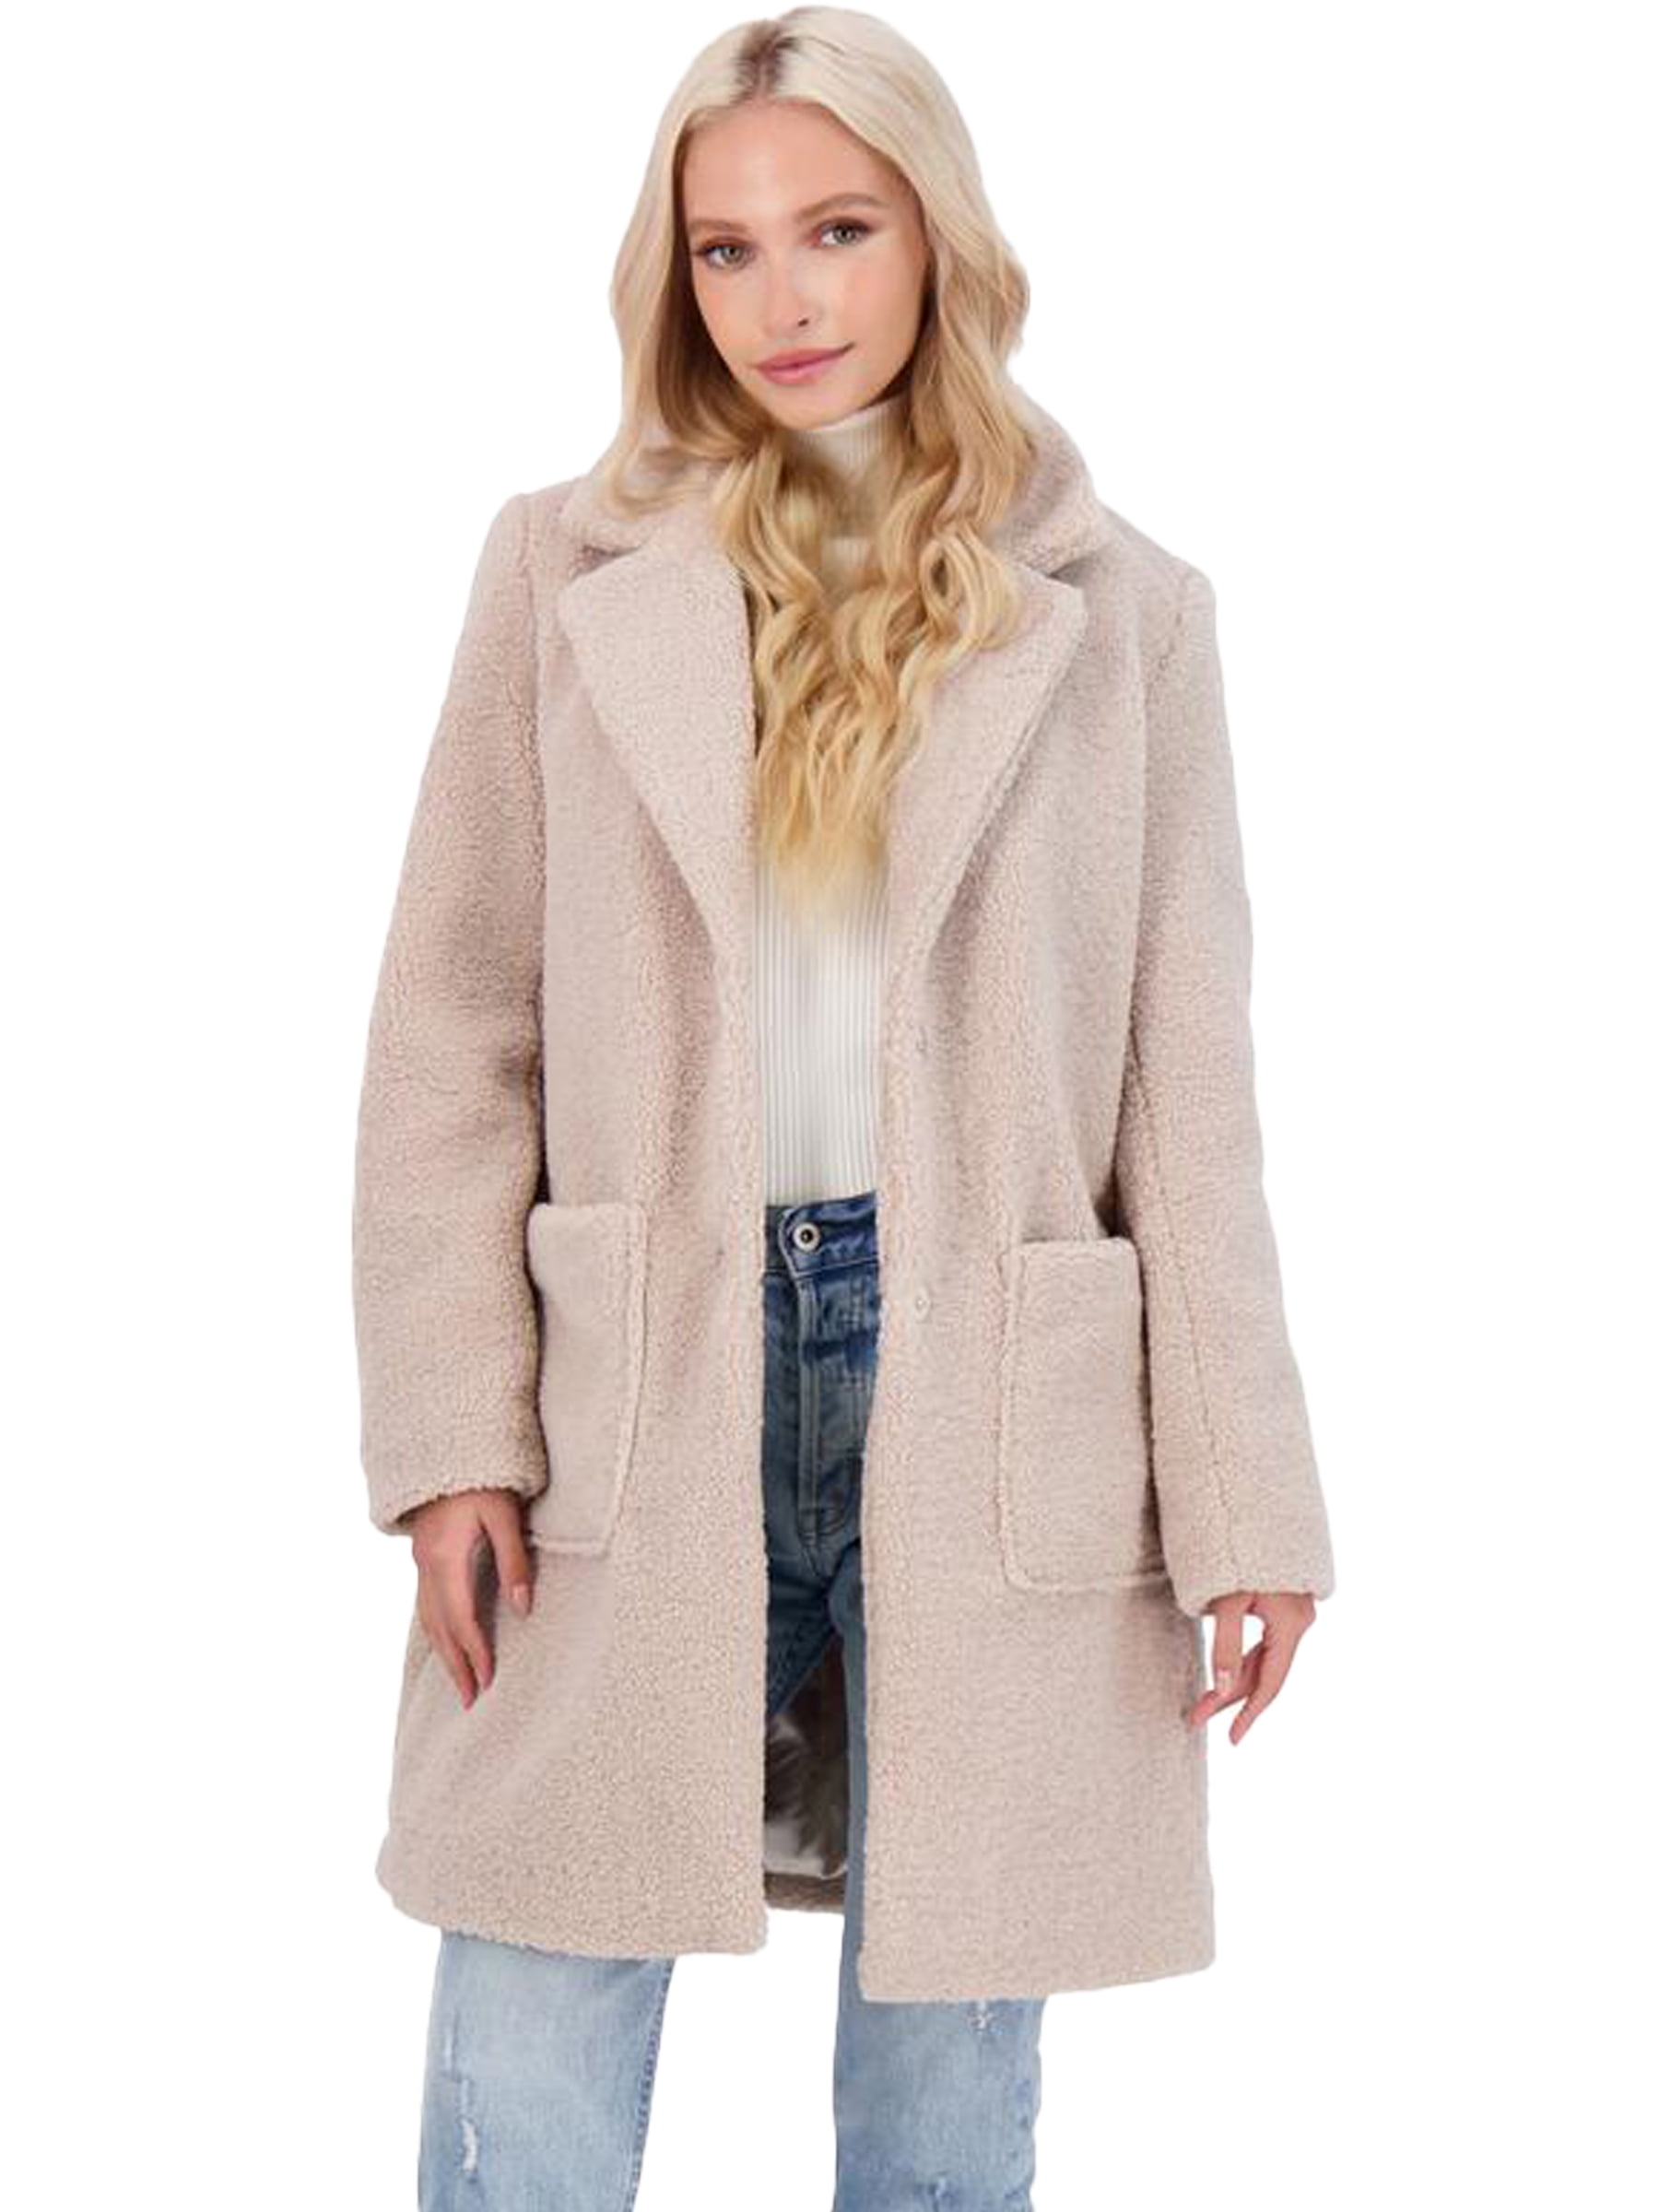 French Connection Womens Teddy Faux Shearling Faux Fur Coat Beige M -  Walmart.com